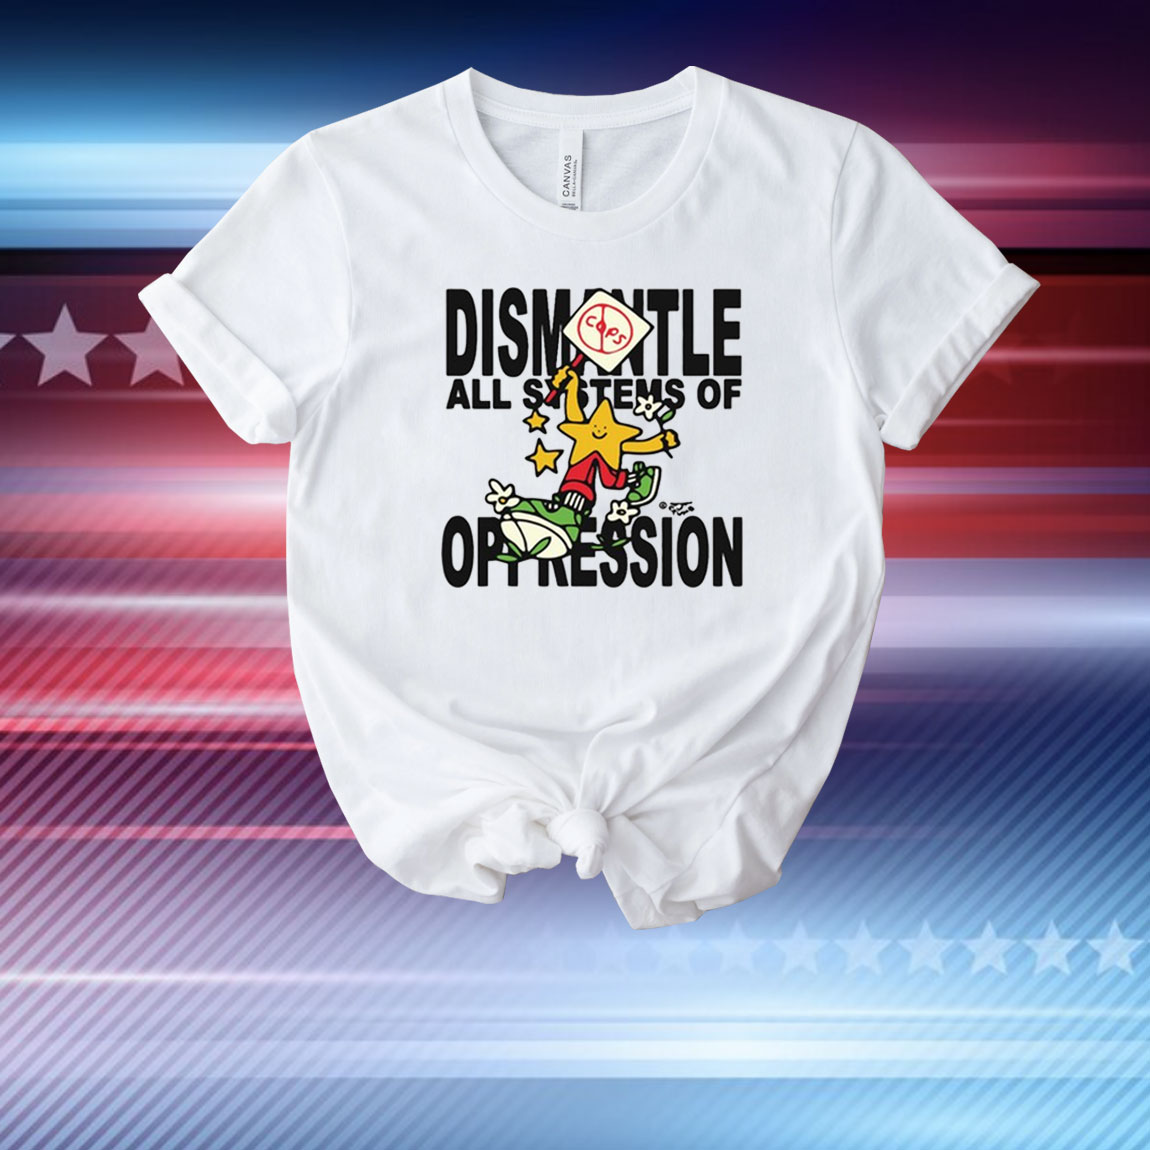 Dismantle Oppression T-Shirt